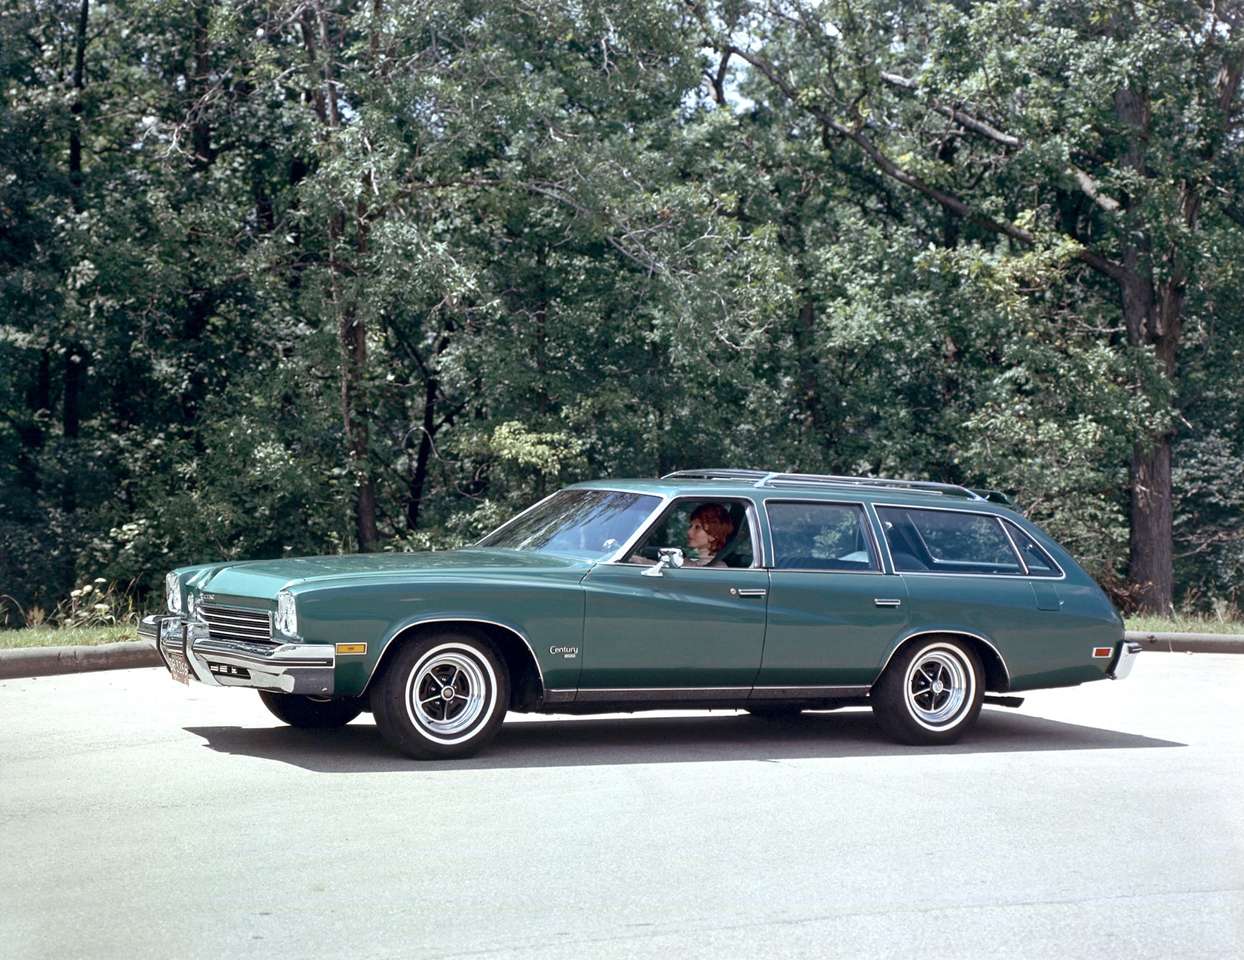 Універсал Buick Century Luxus 1973 року випуску онлайн пазл